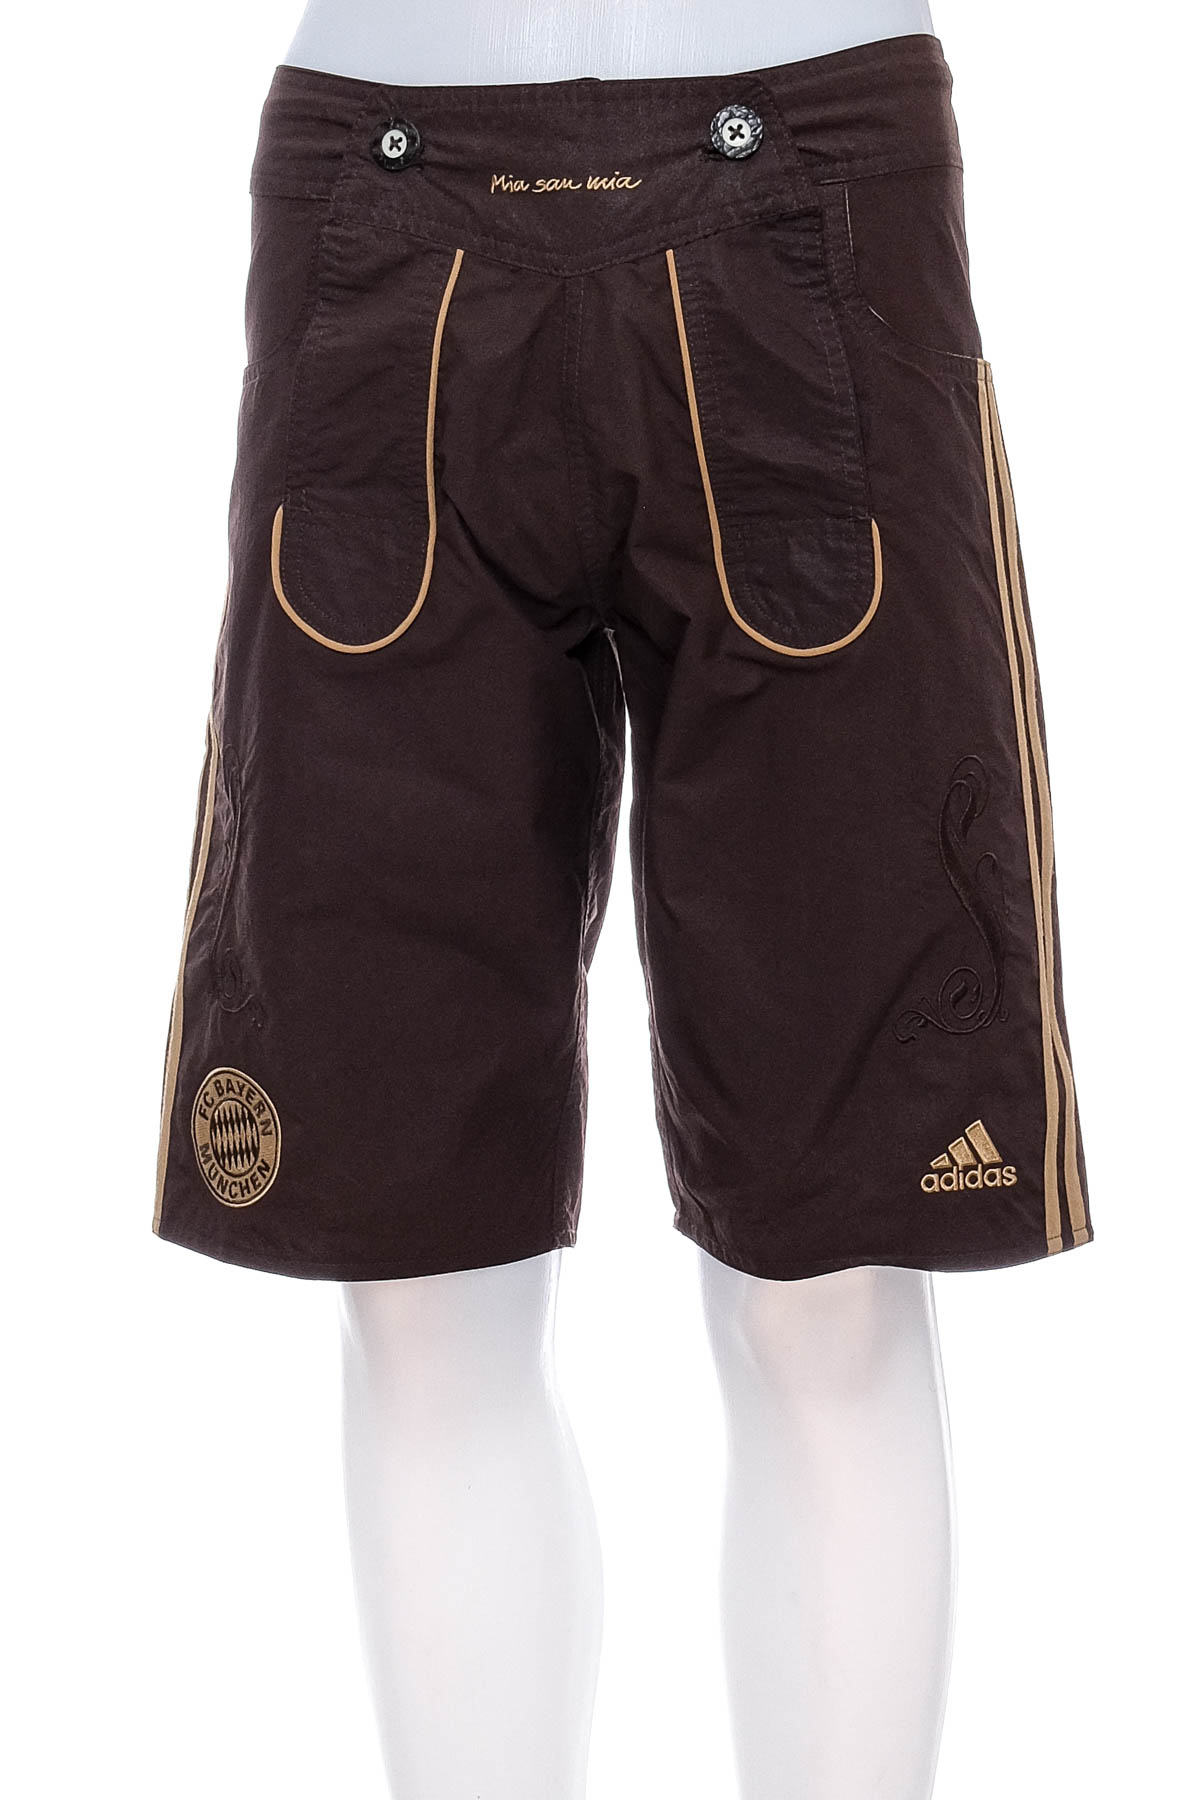 Men's shorts - Adidas - 0